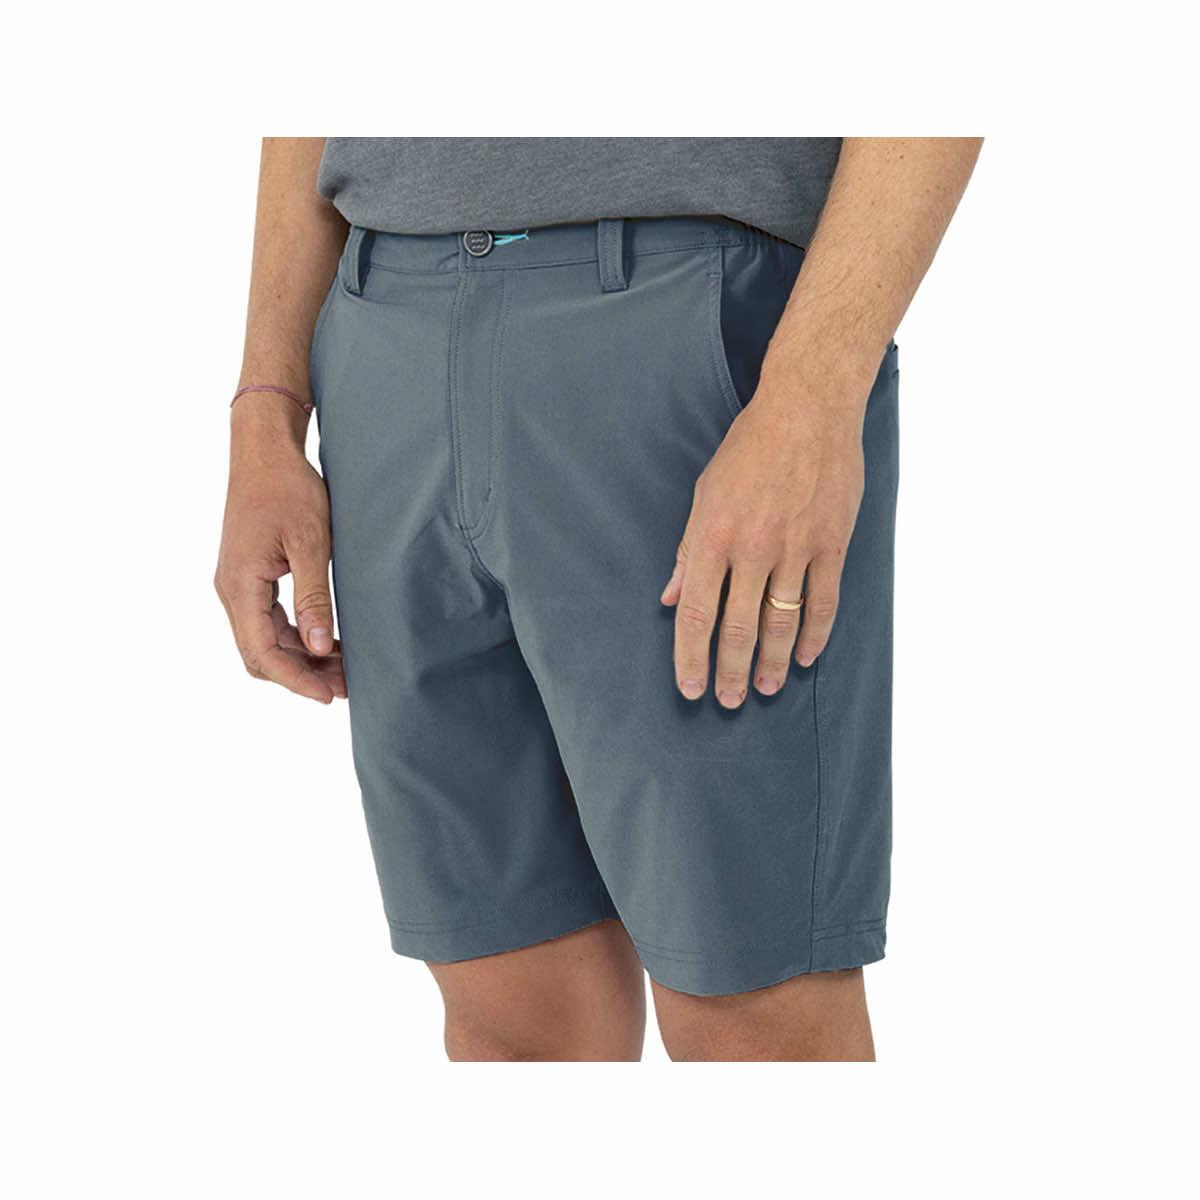 Men's Lakewashed Stretch Khaki Shorts, 9